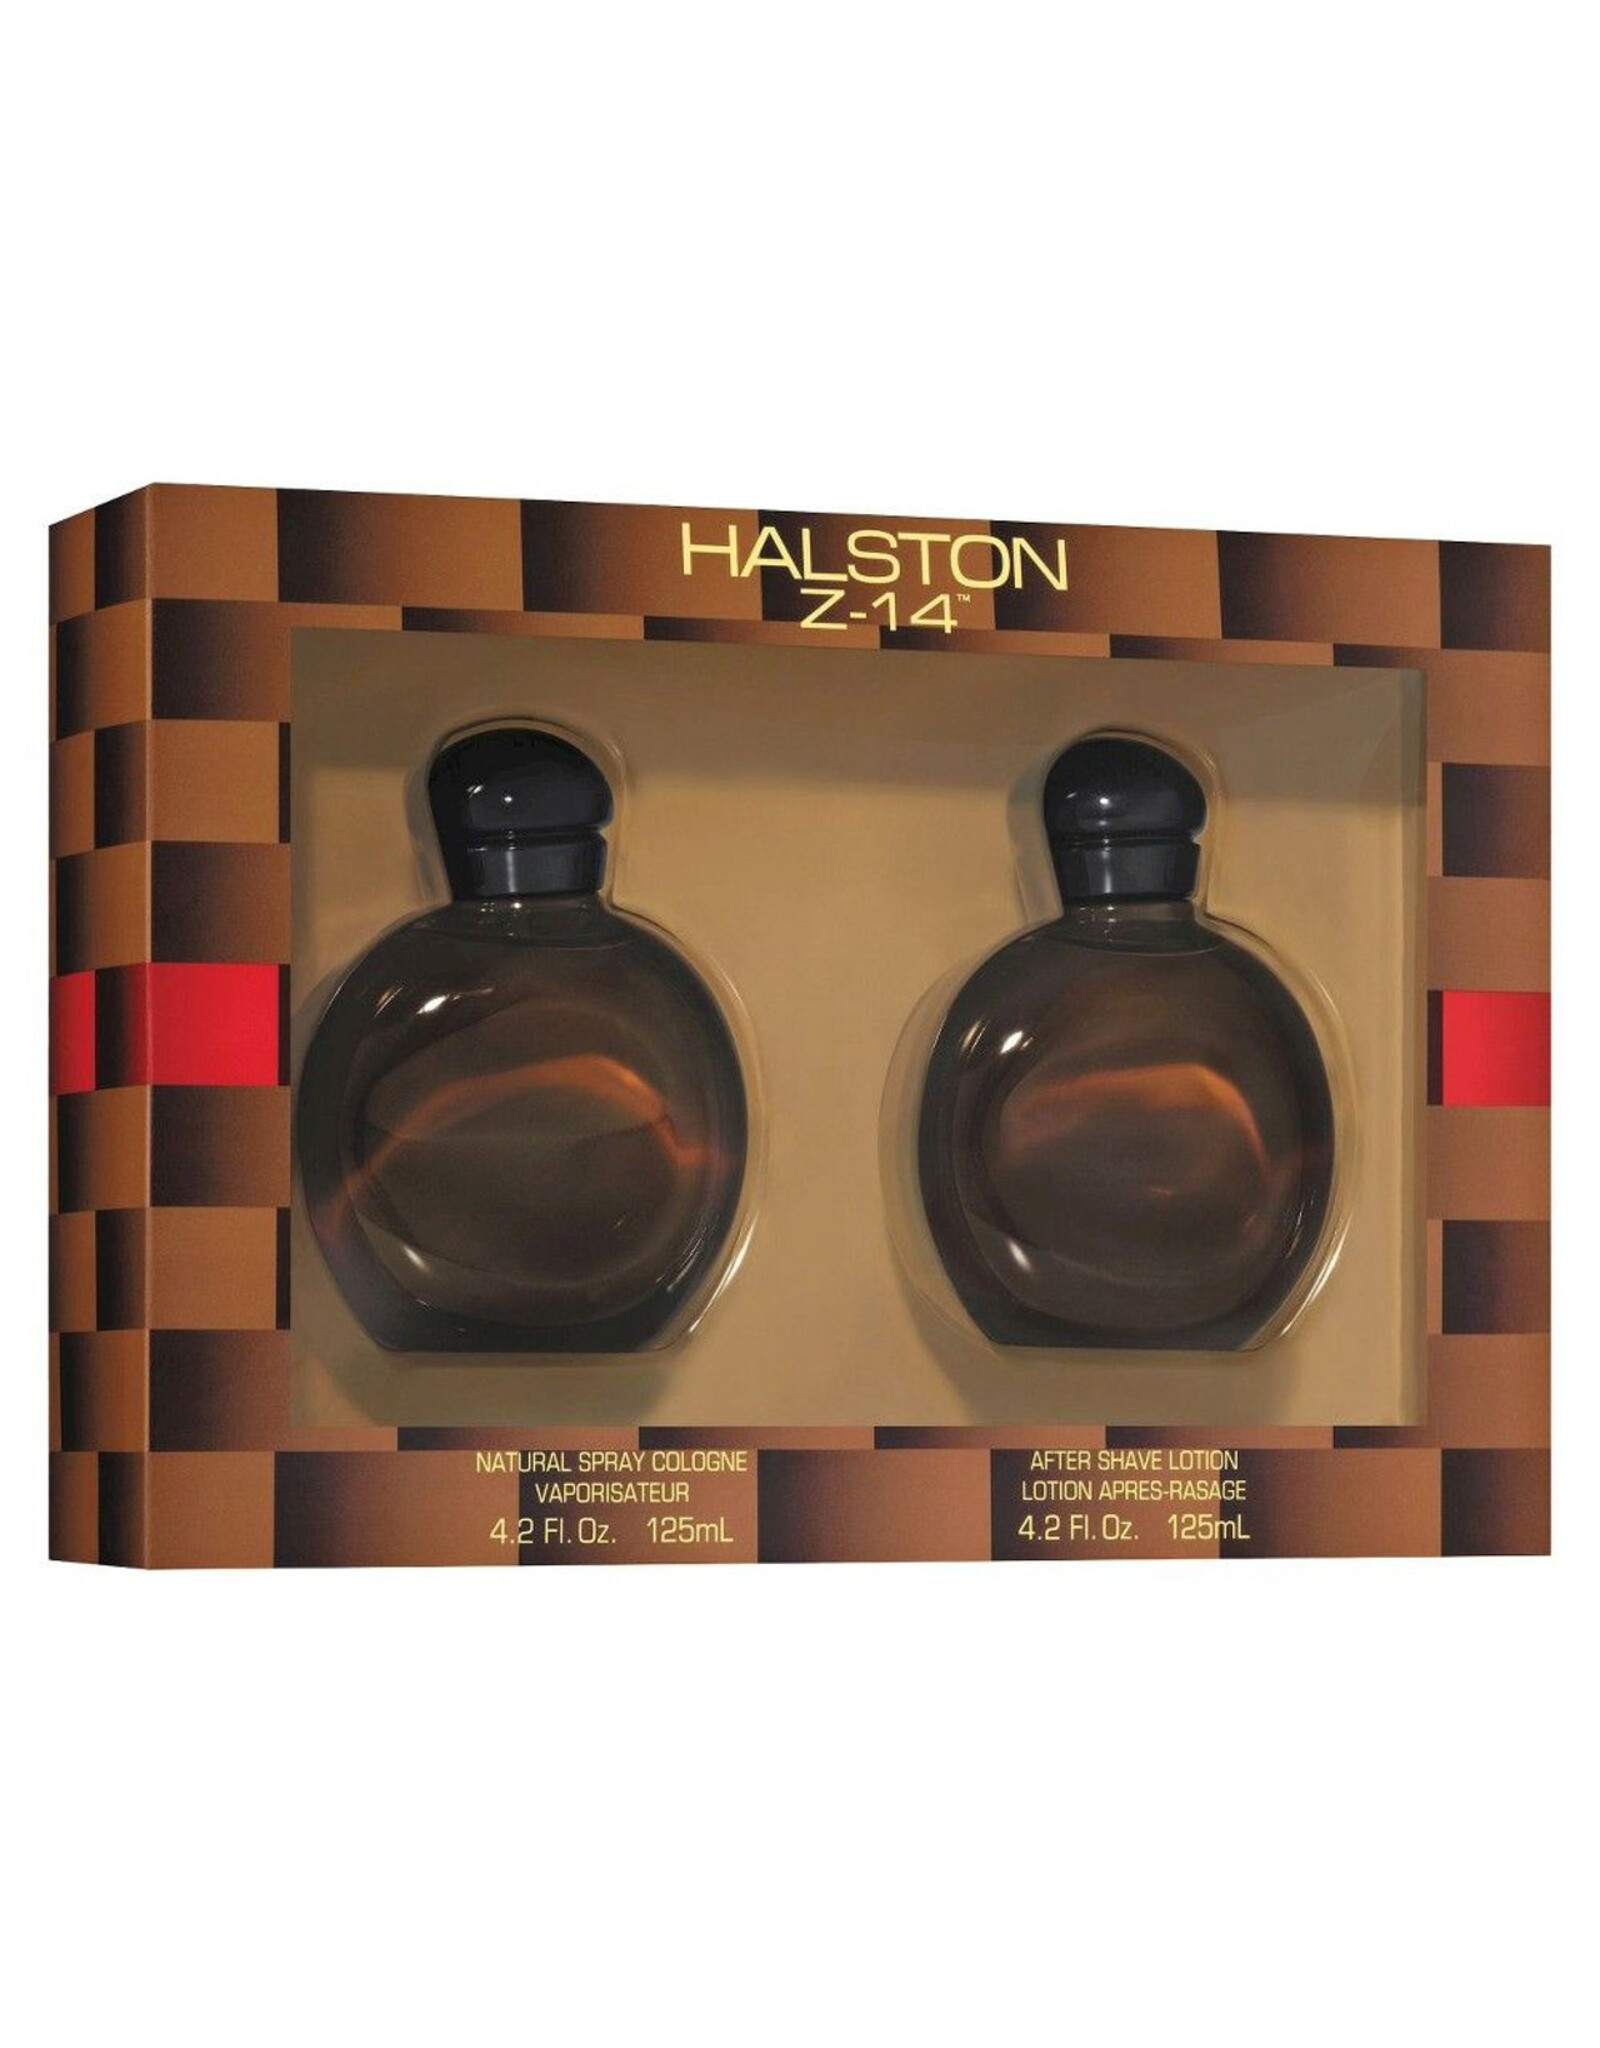 HALSTON HALSTON Z-14 2pcs Set